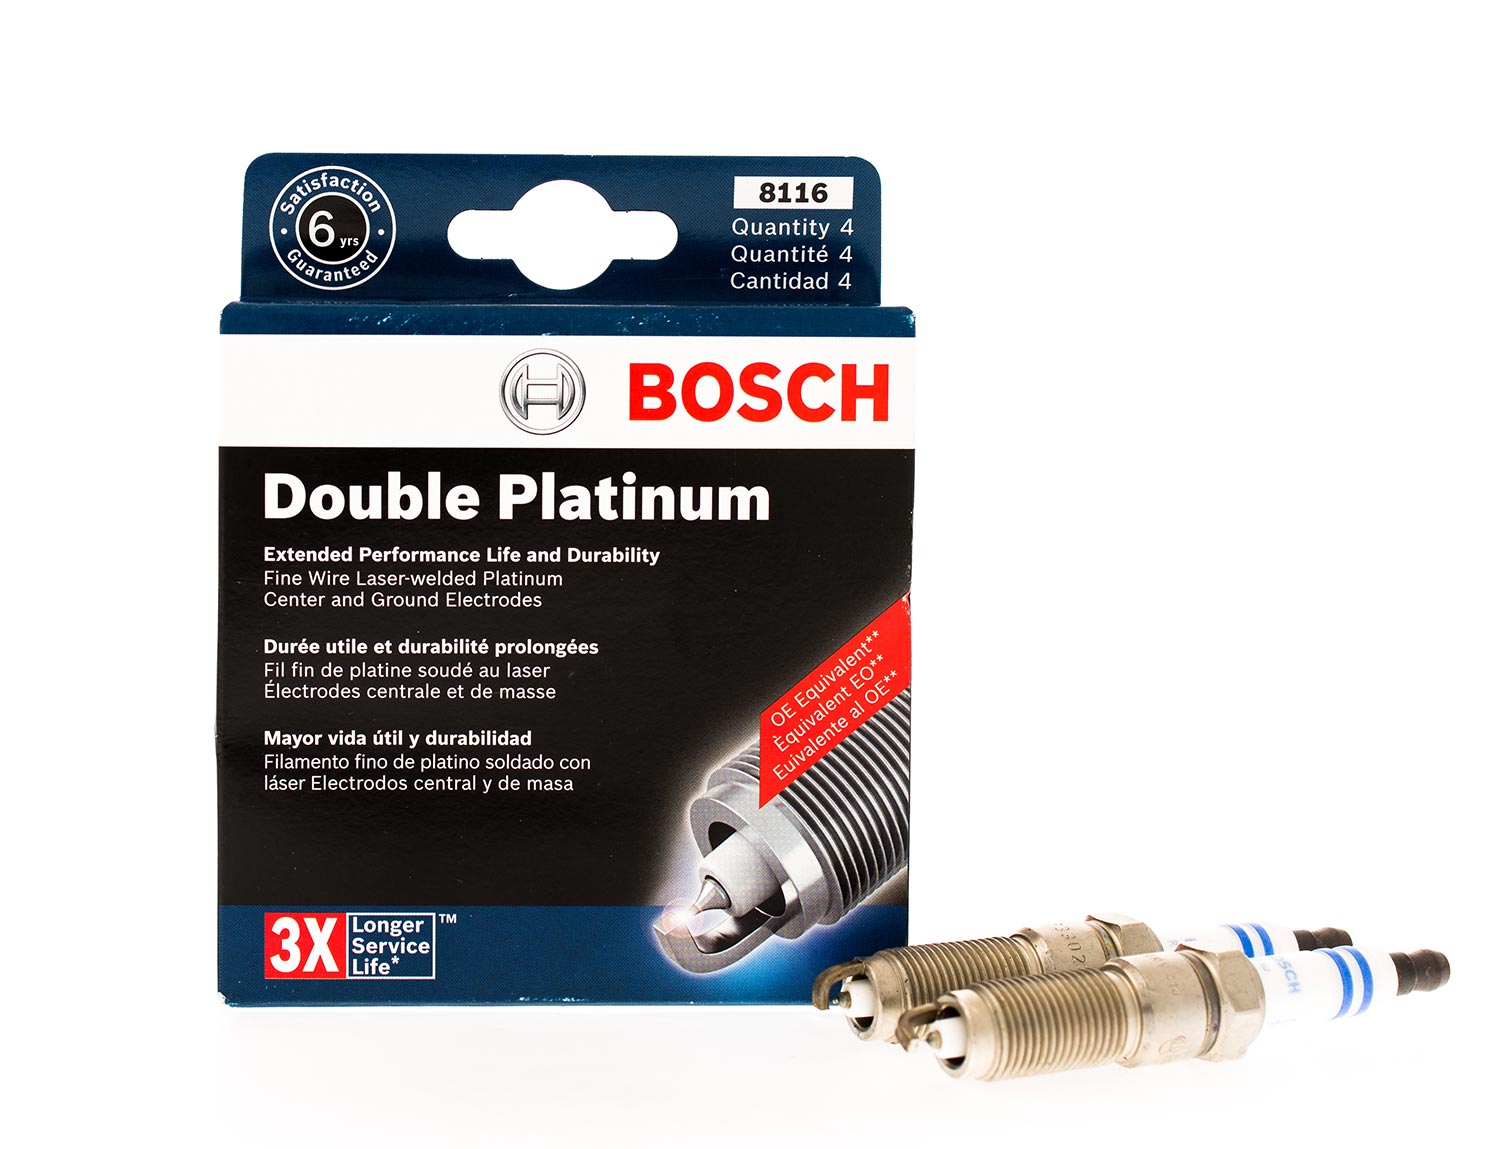 Bosch Plantinum spark plugs are for gasoline engines